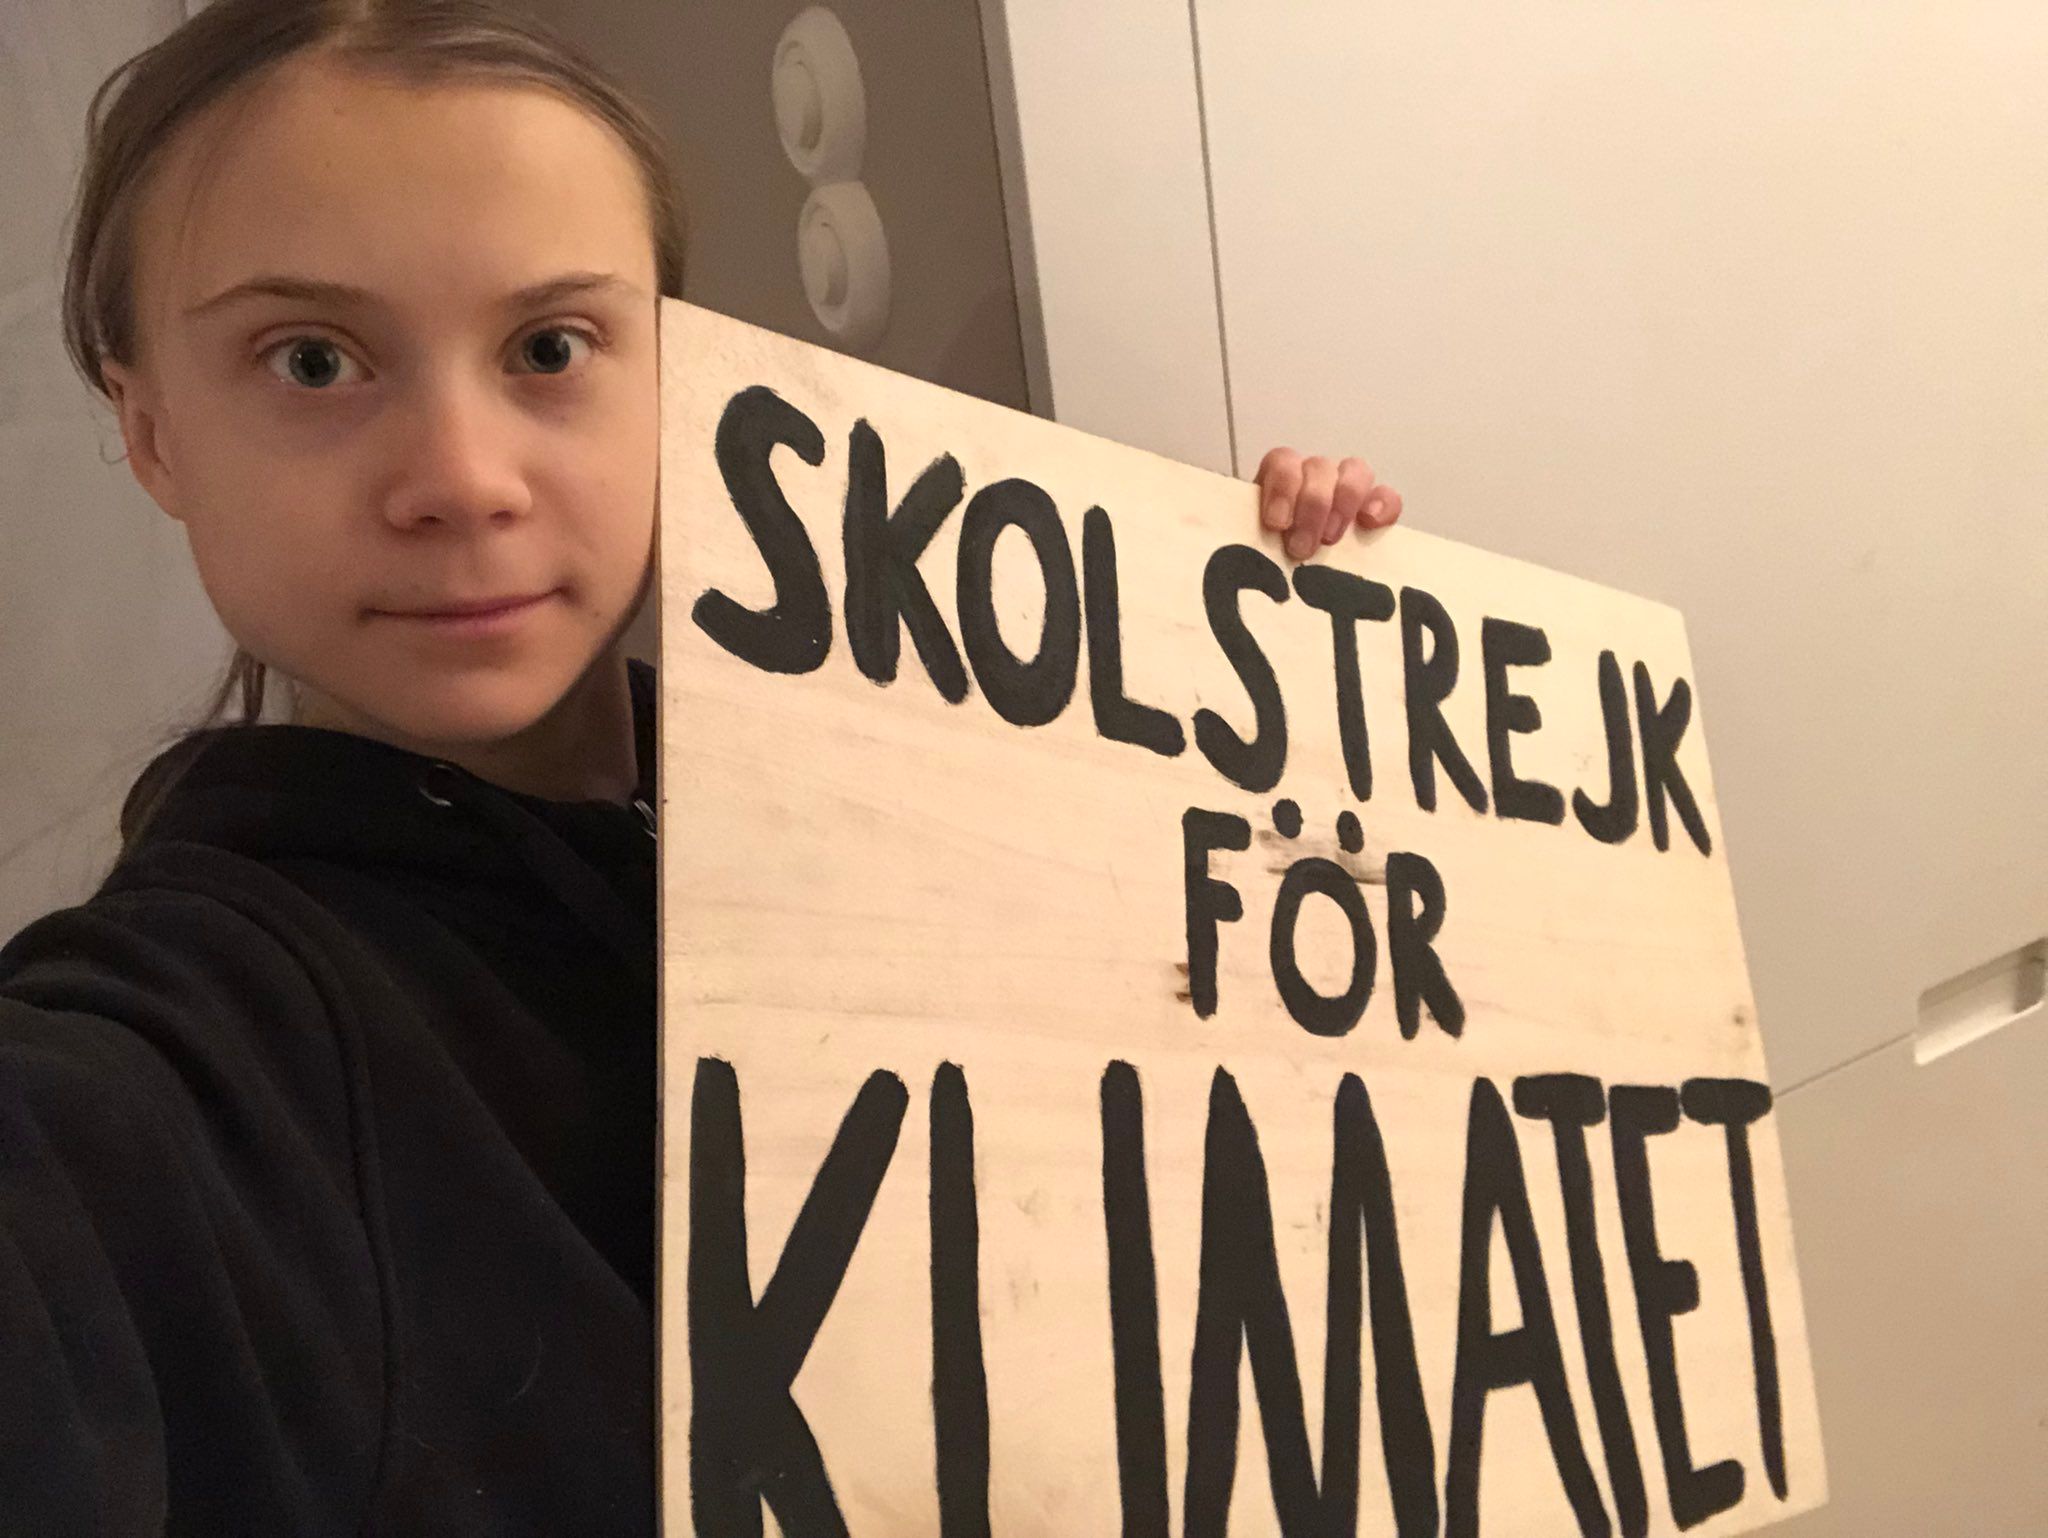 Greta Thunberg female role models